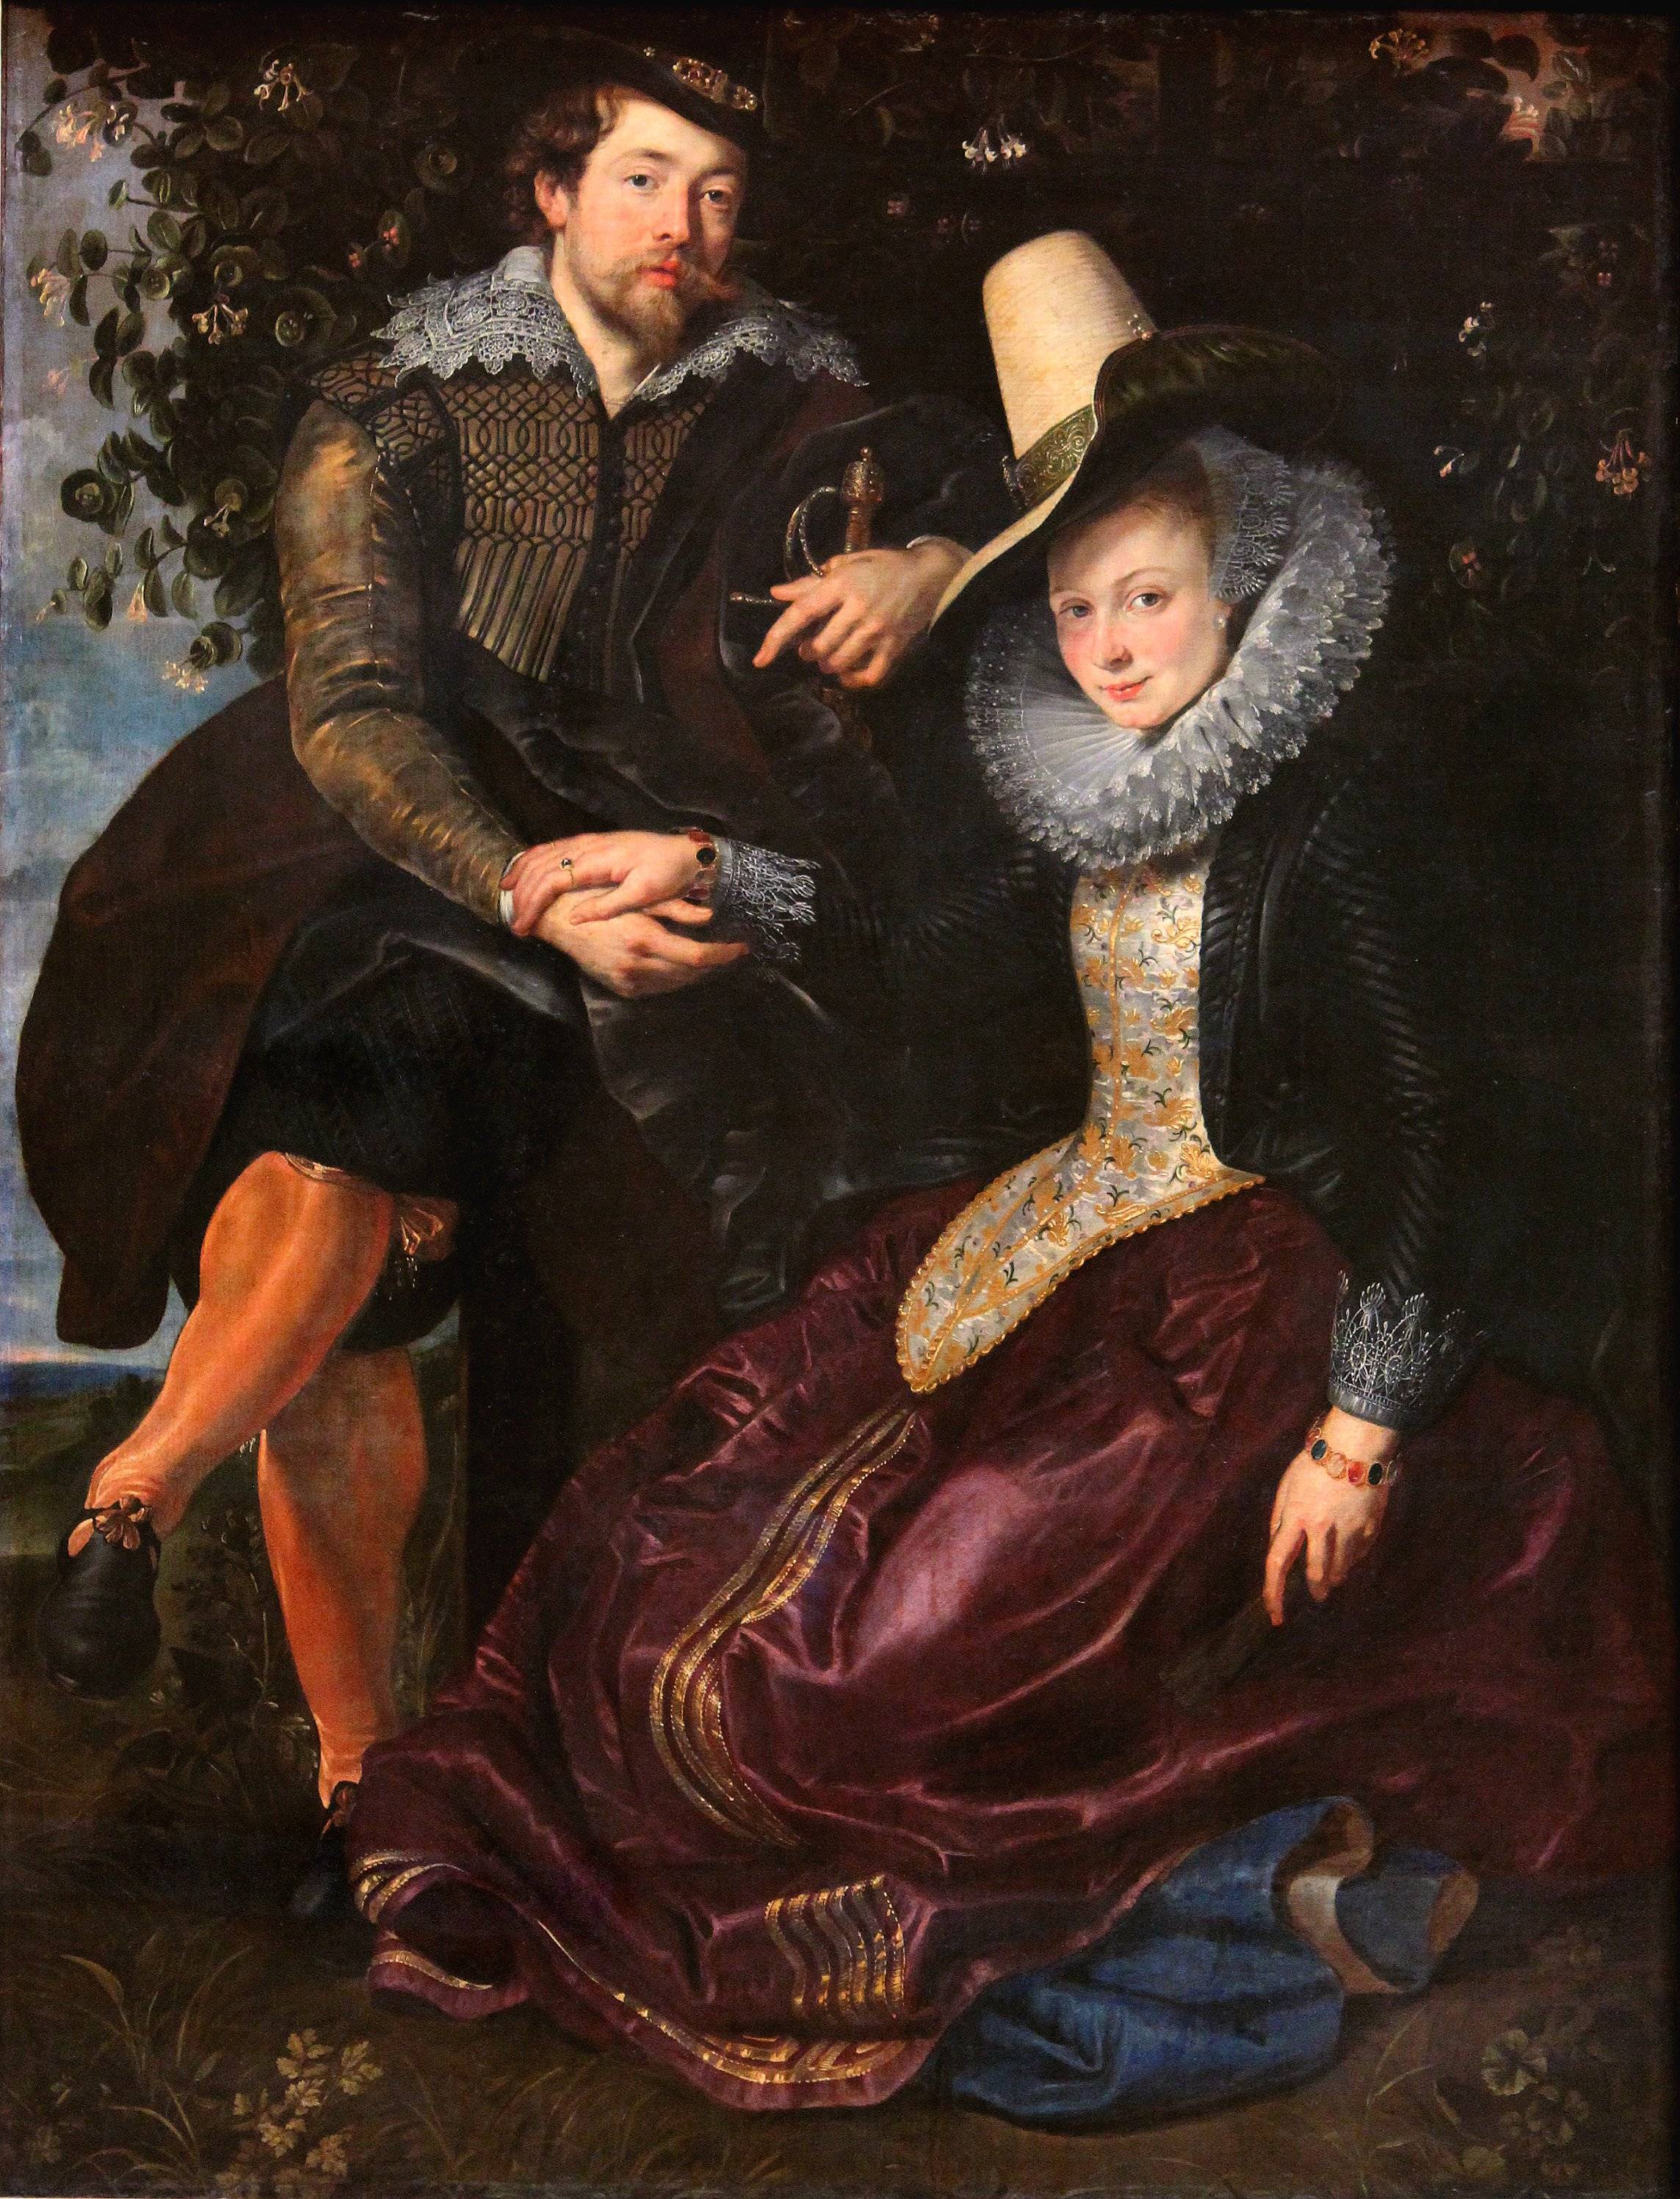 Peter Paul Rubens (1609-1610)